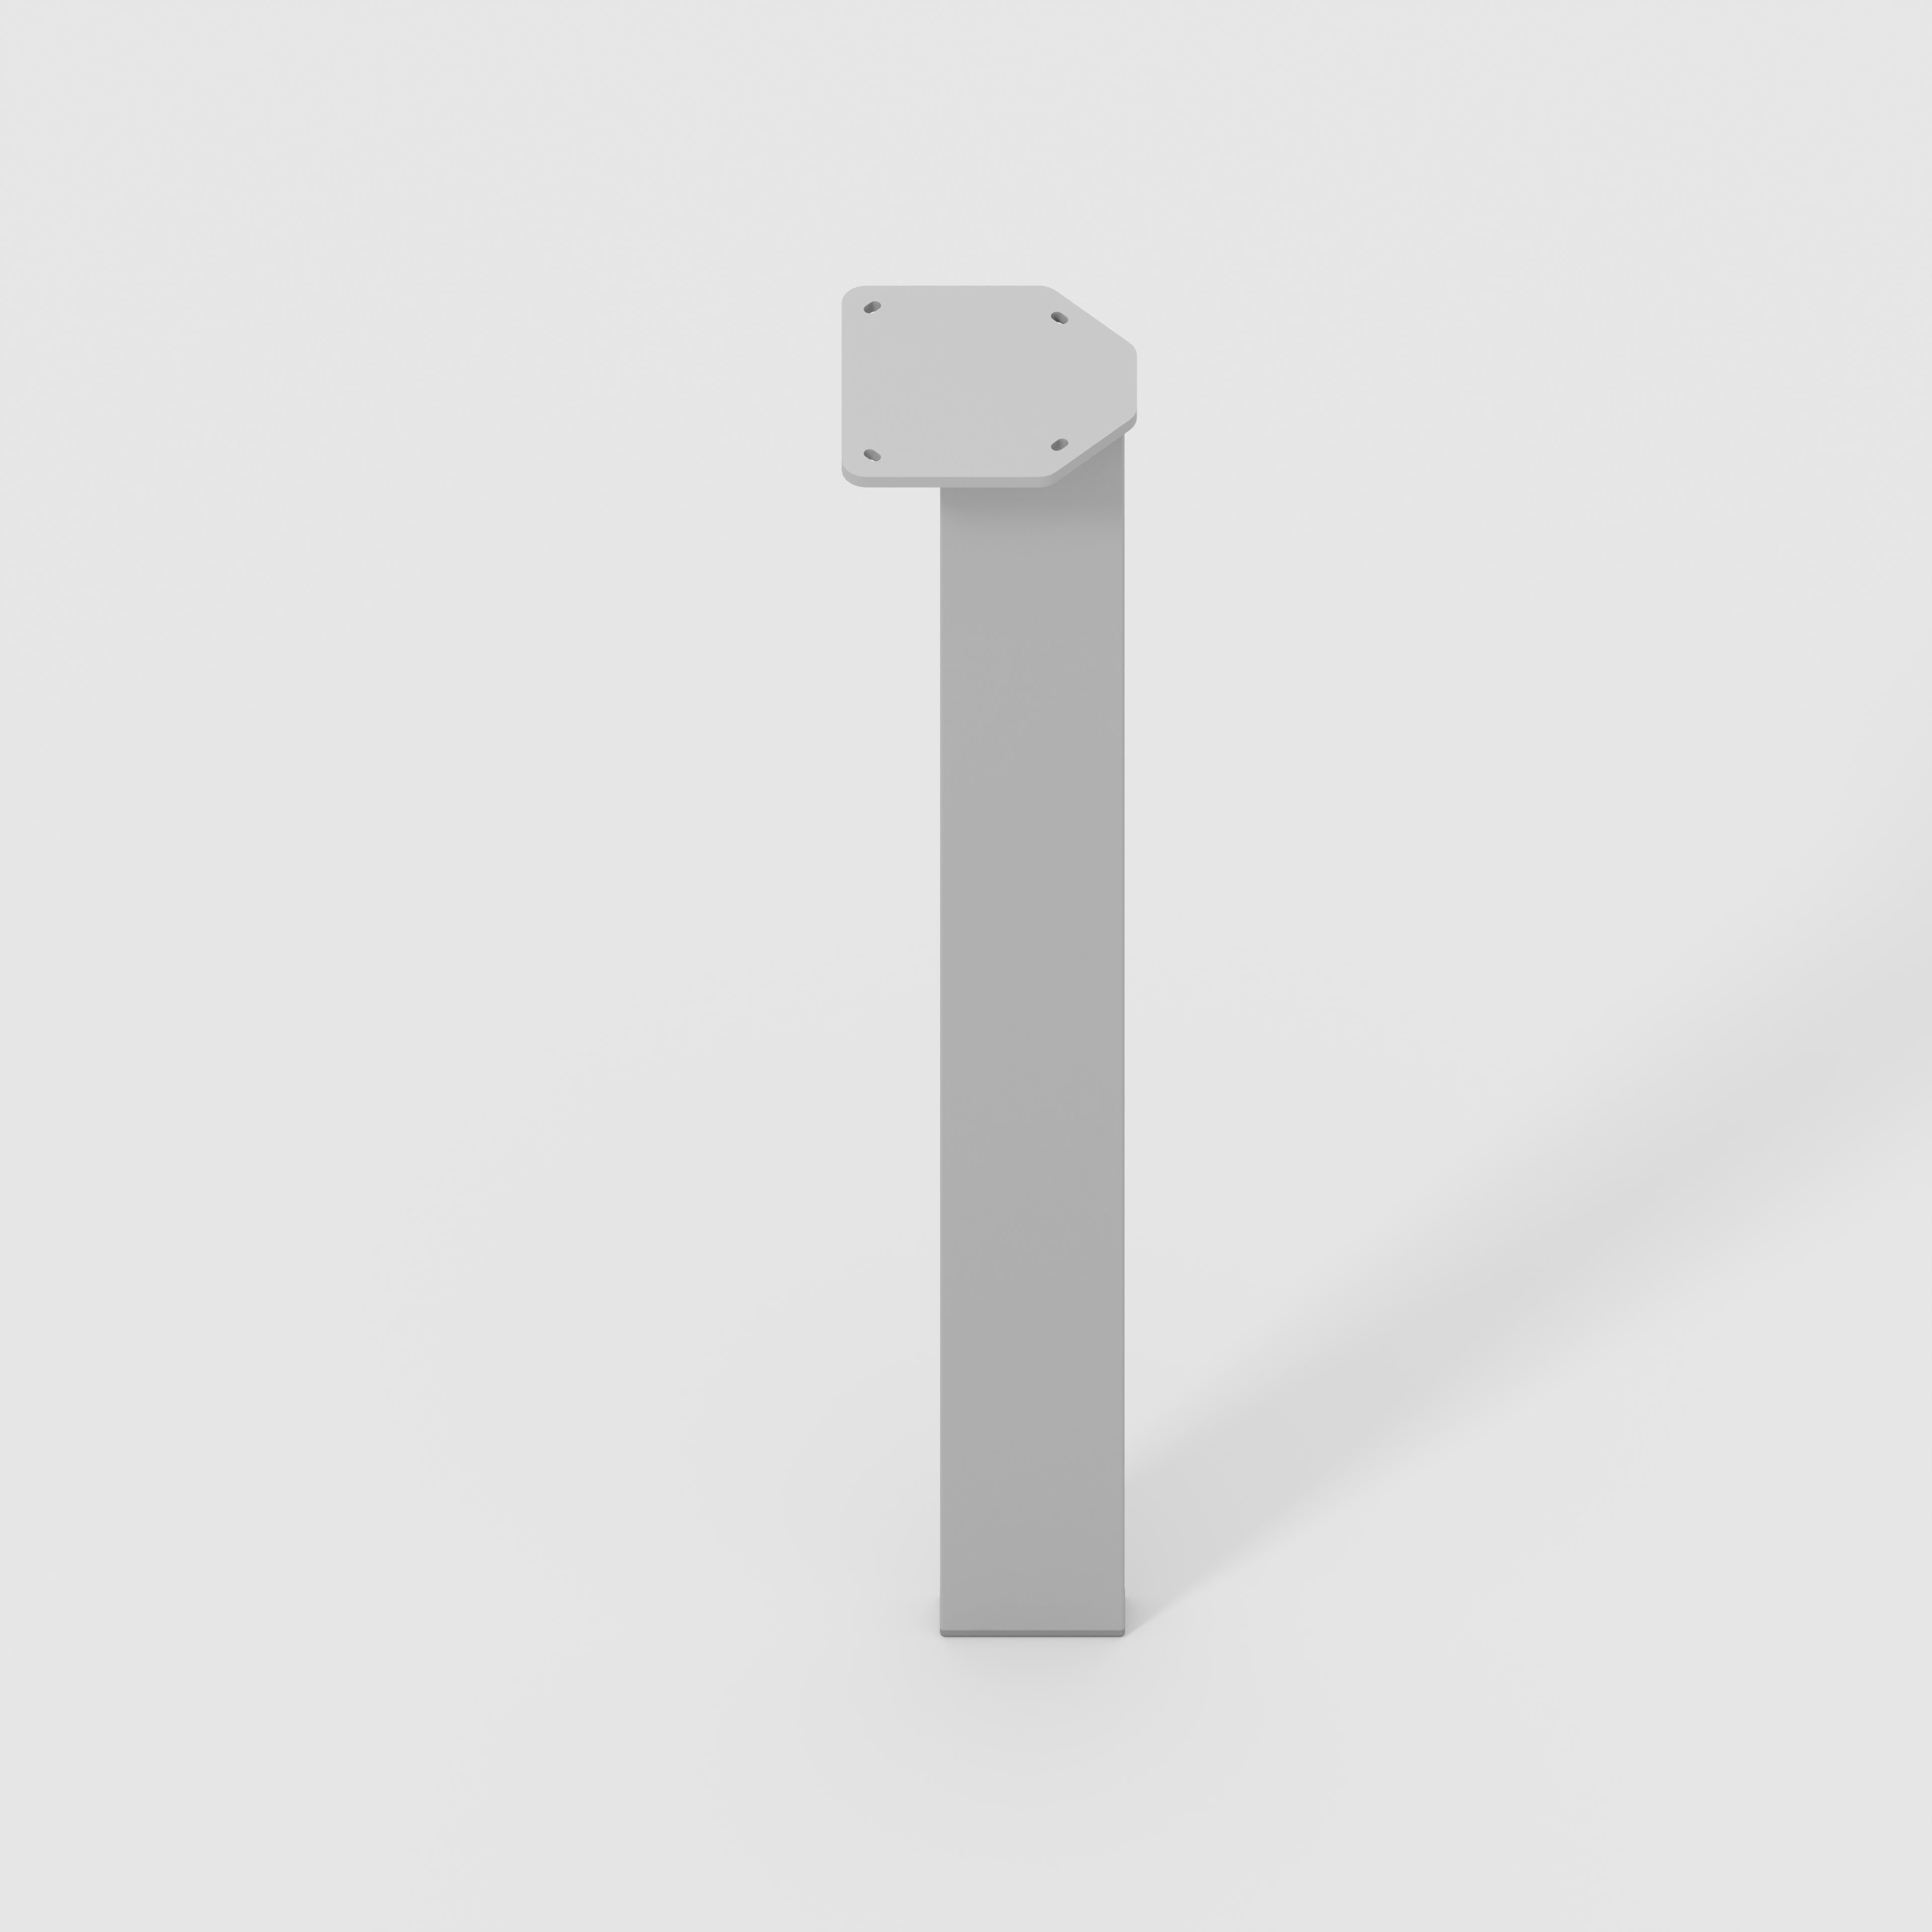 Desk/Table Legs - Rectangular Single Pin